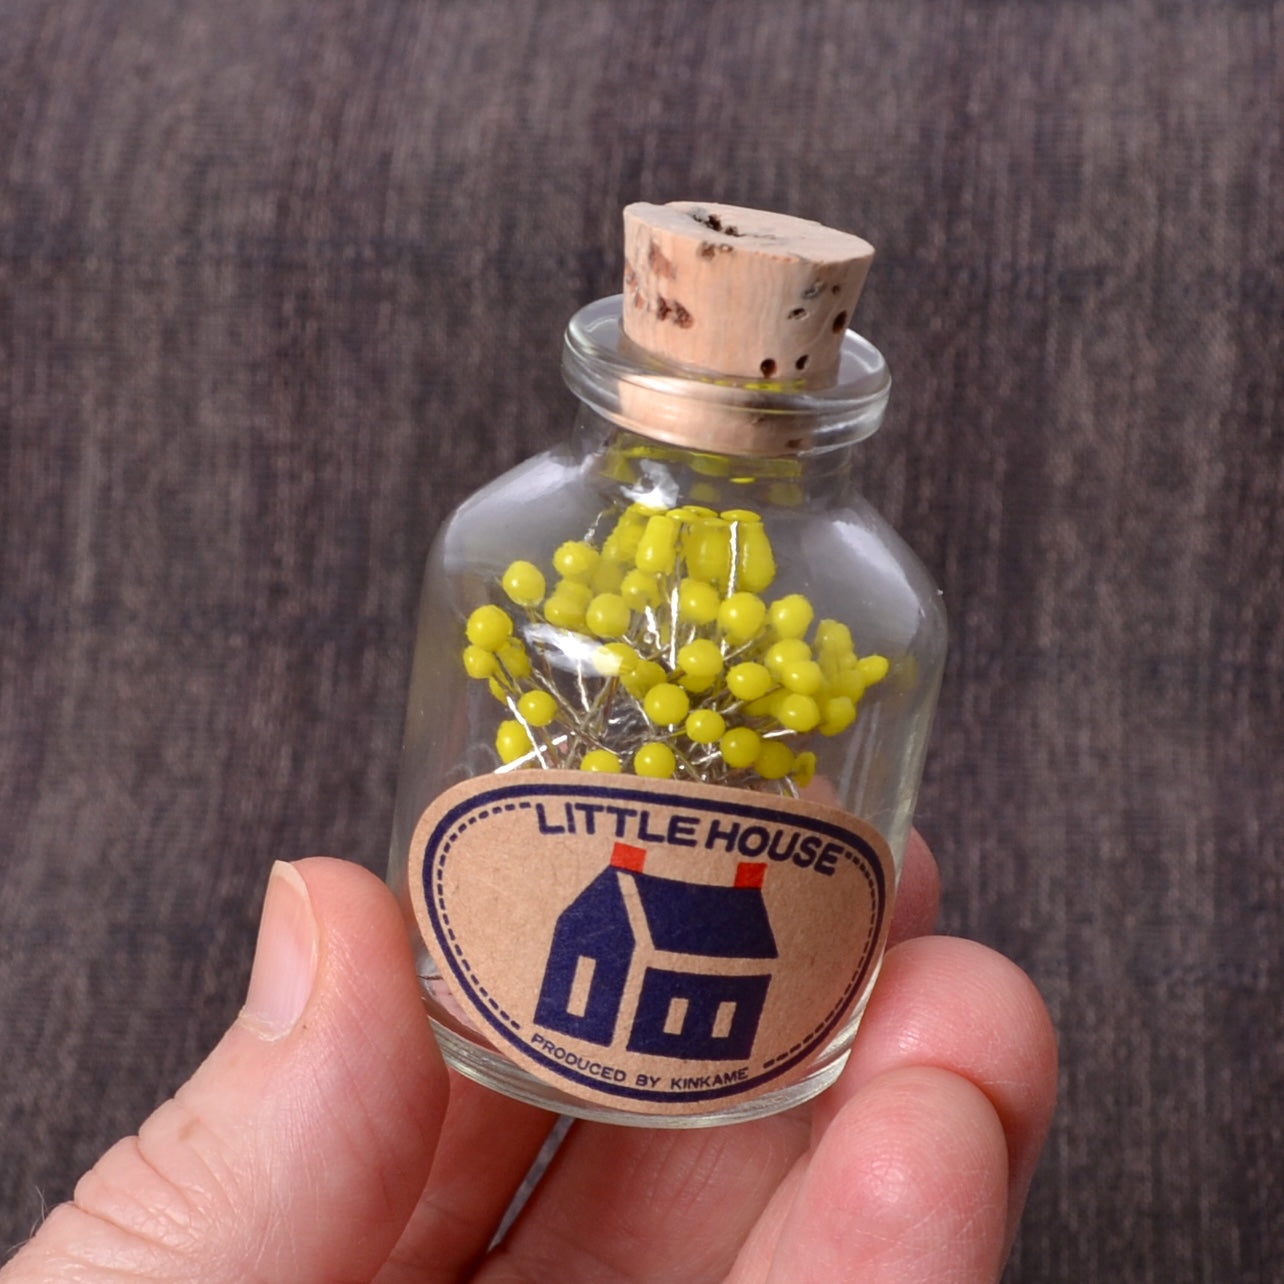 Little House pins in a glass bottle